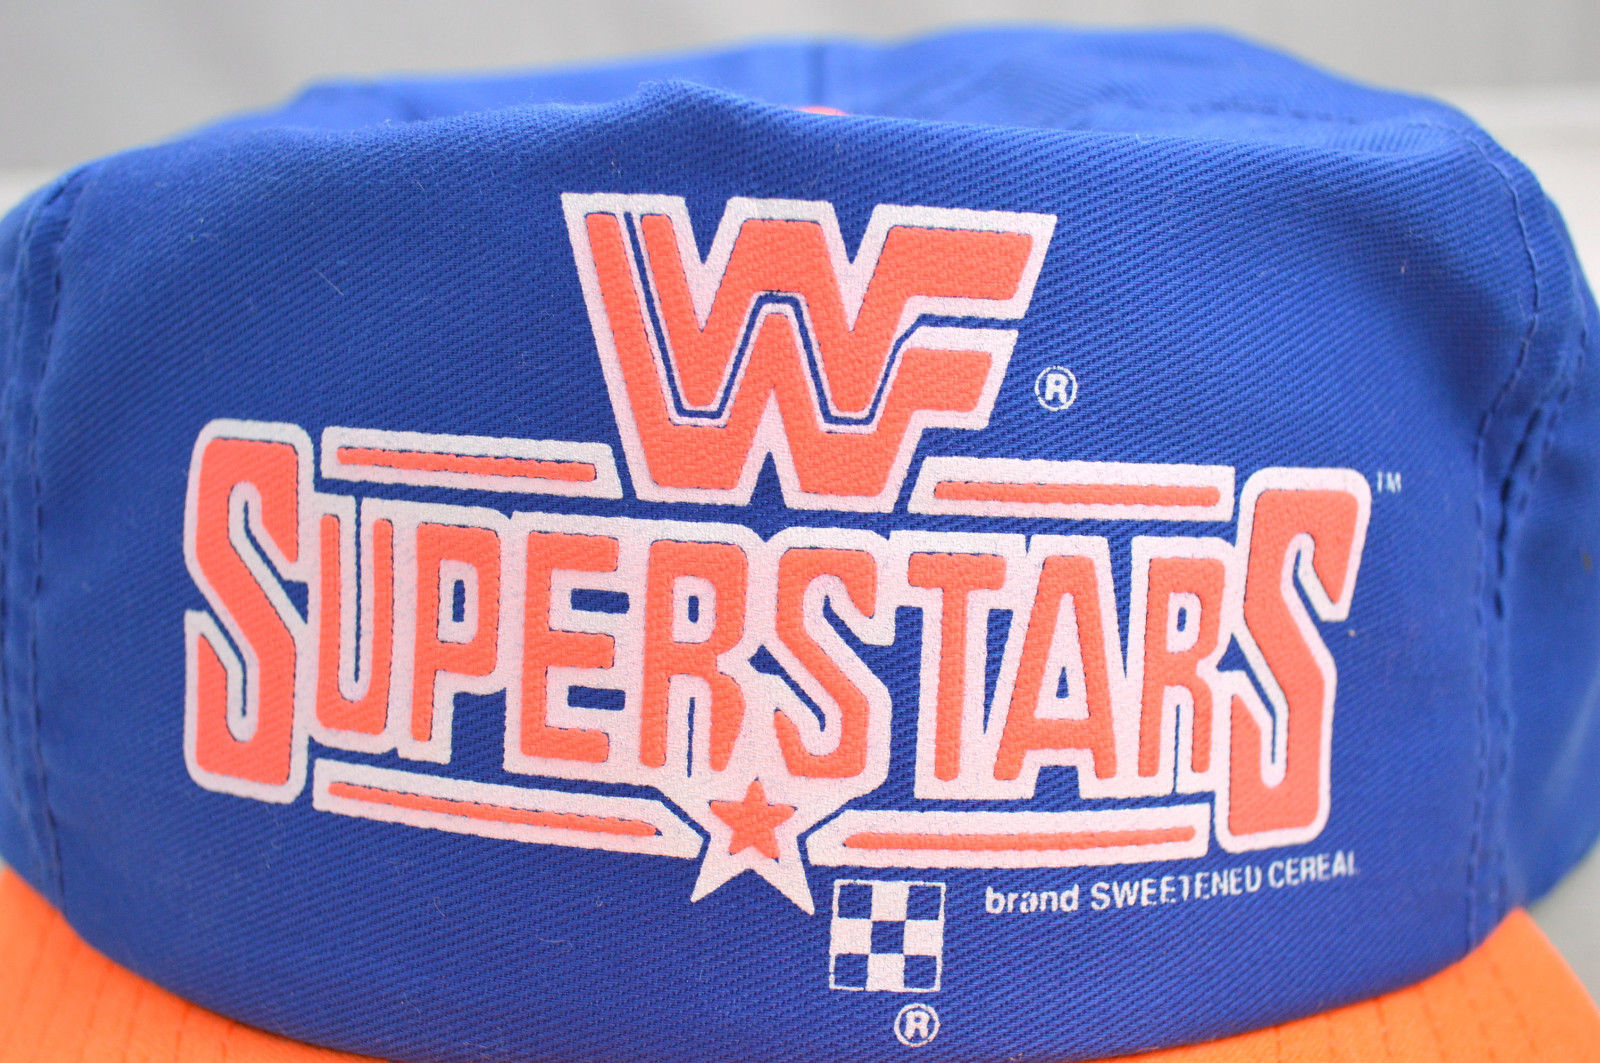 WWF Superstars Cereal cap hat 2